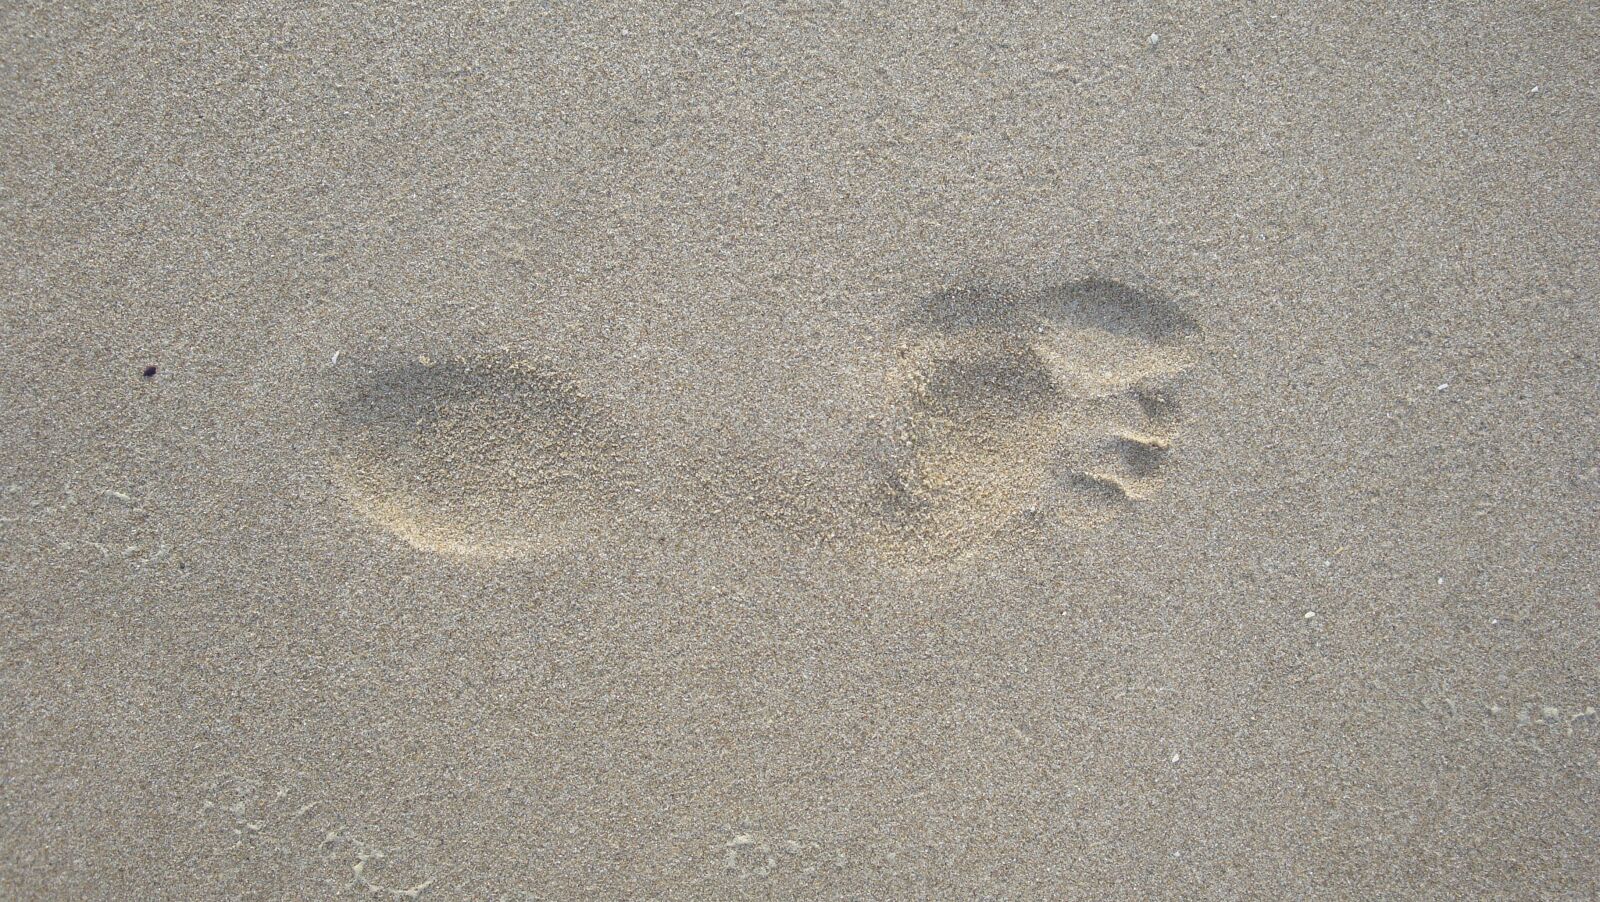 Sony Cyber-shot DSC-W170 sample photo. Sand, footprint, foot photography